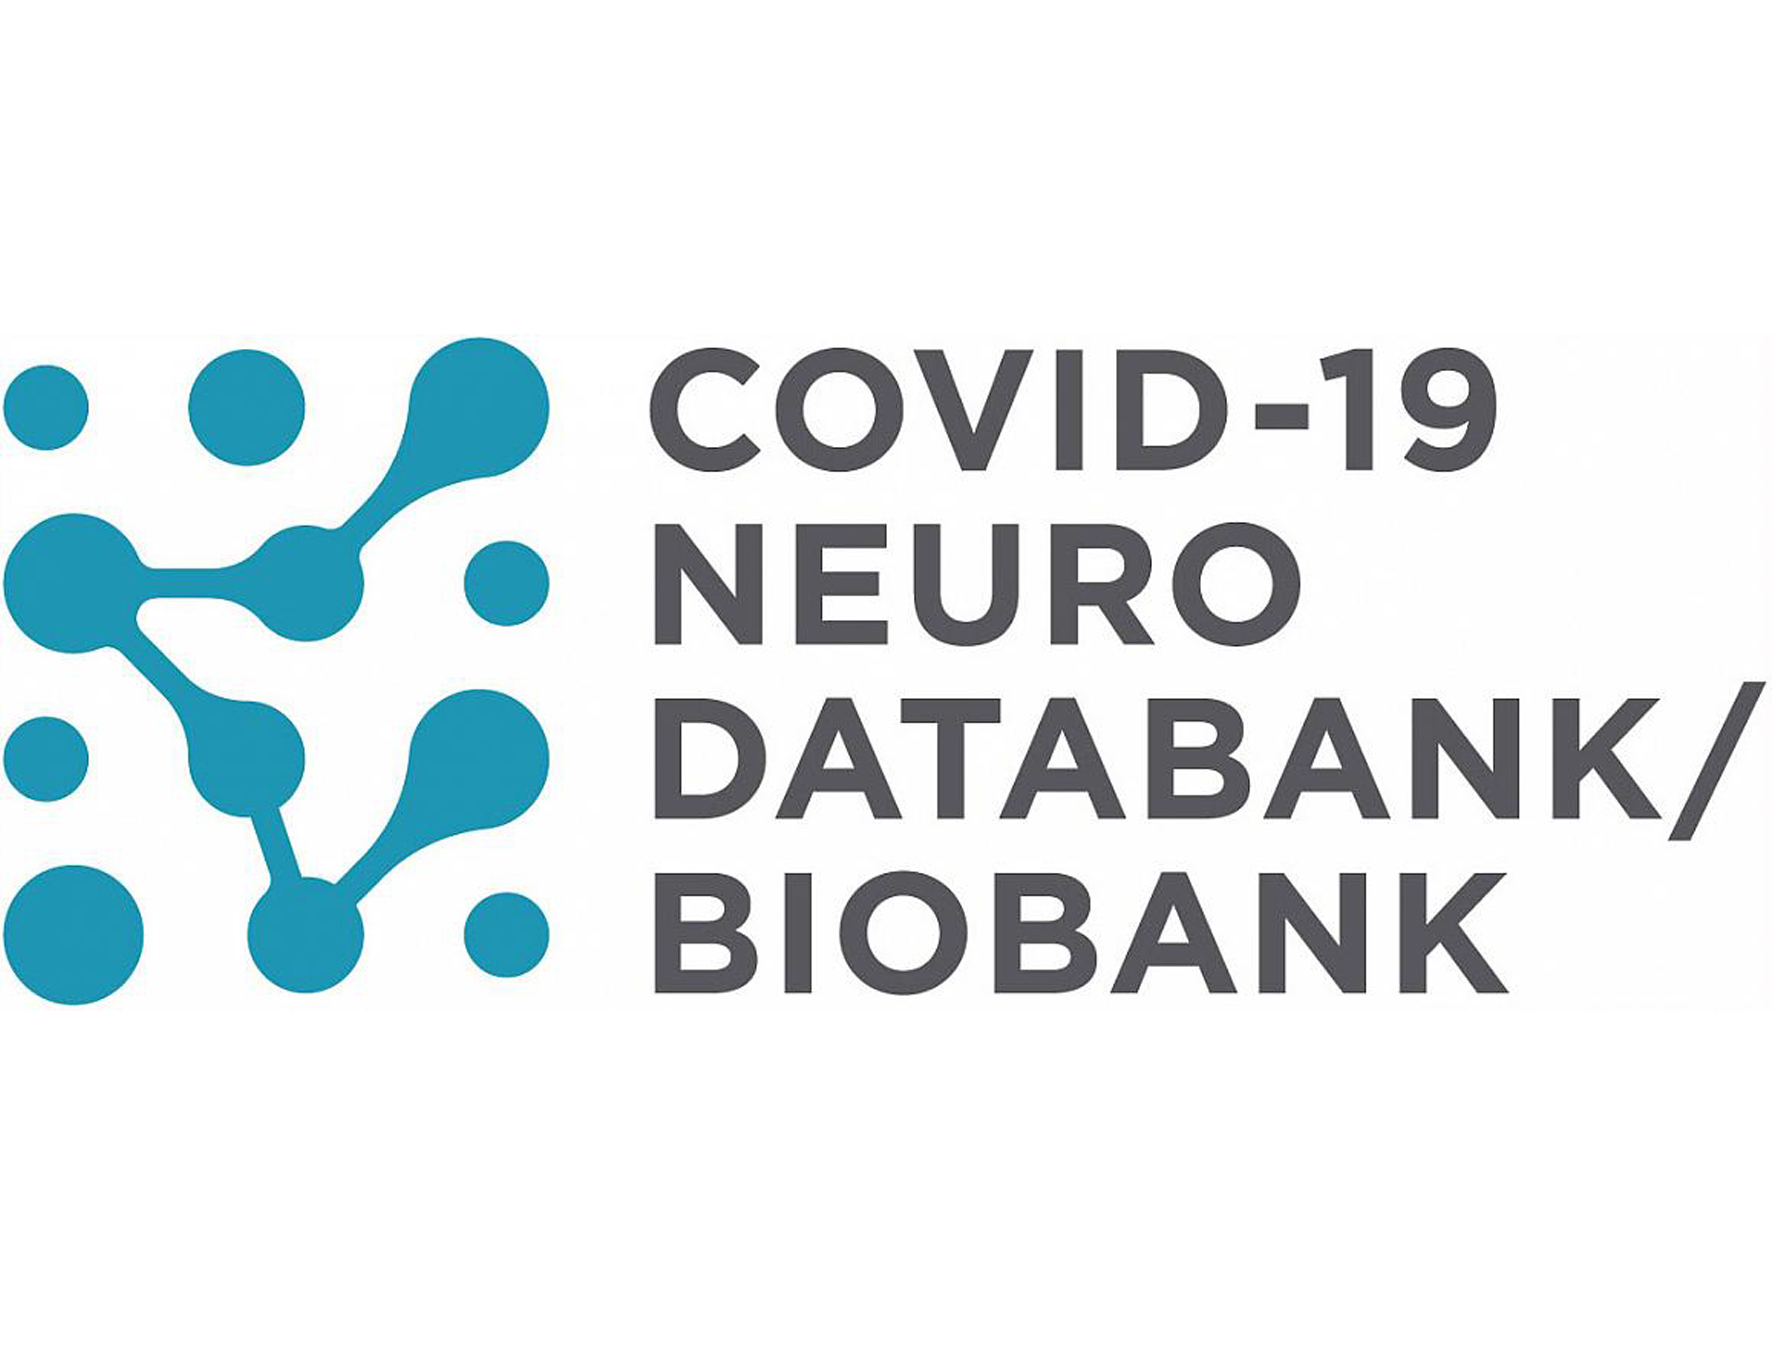 Covid-19 neurodatabank/biobank